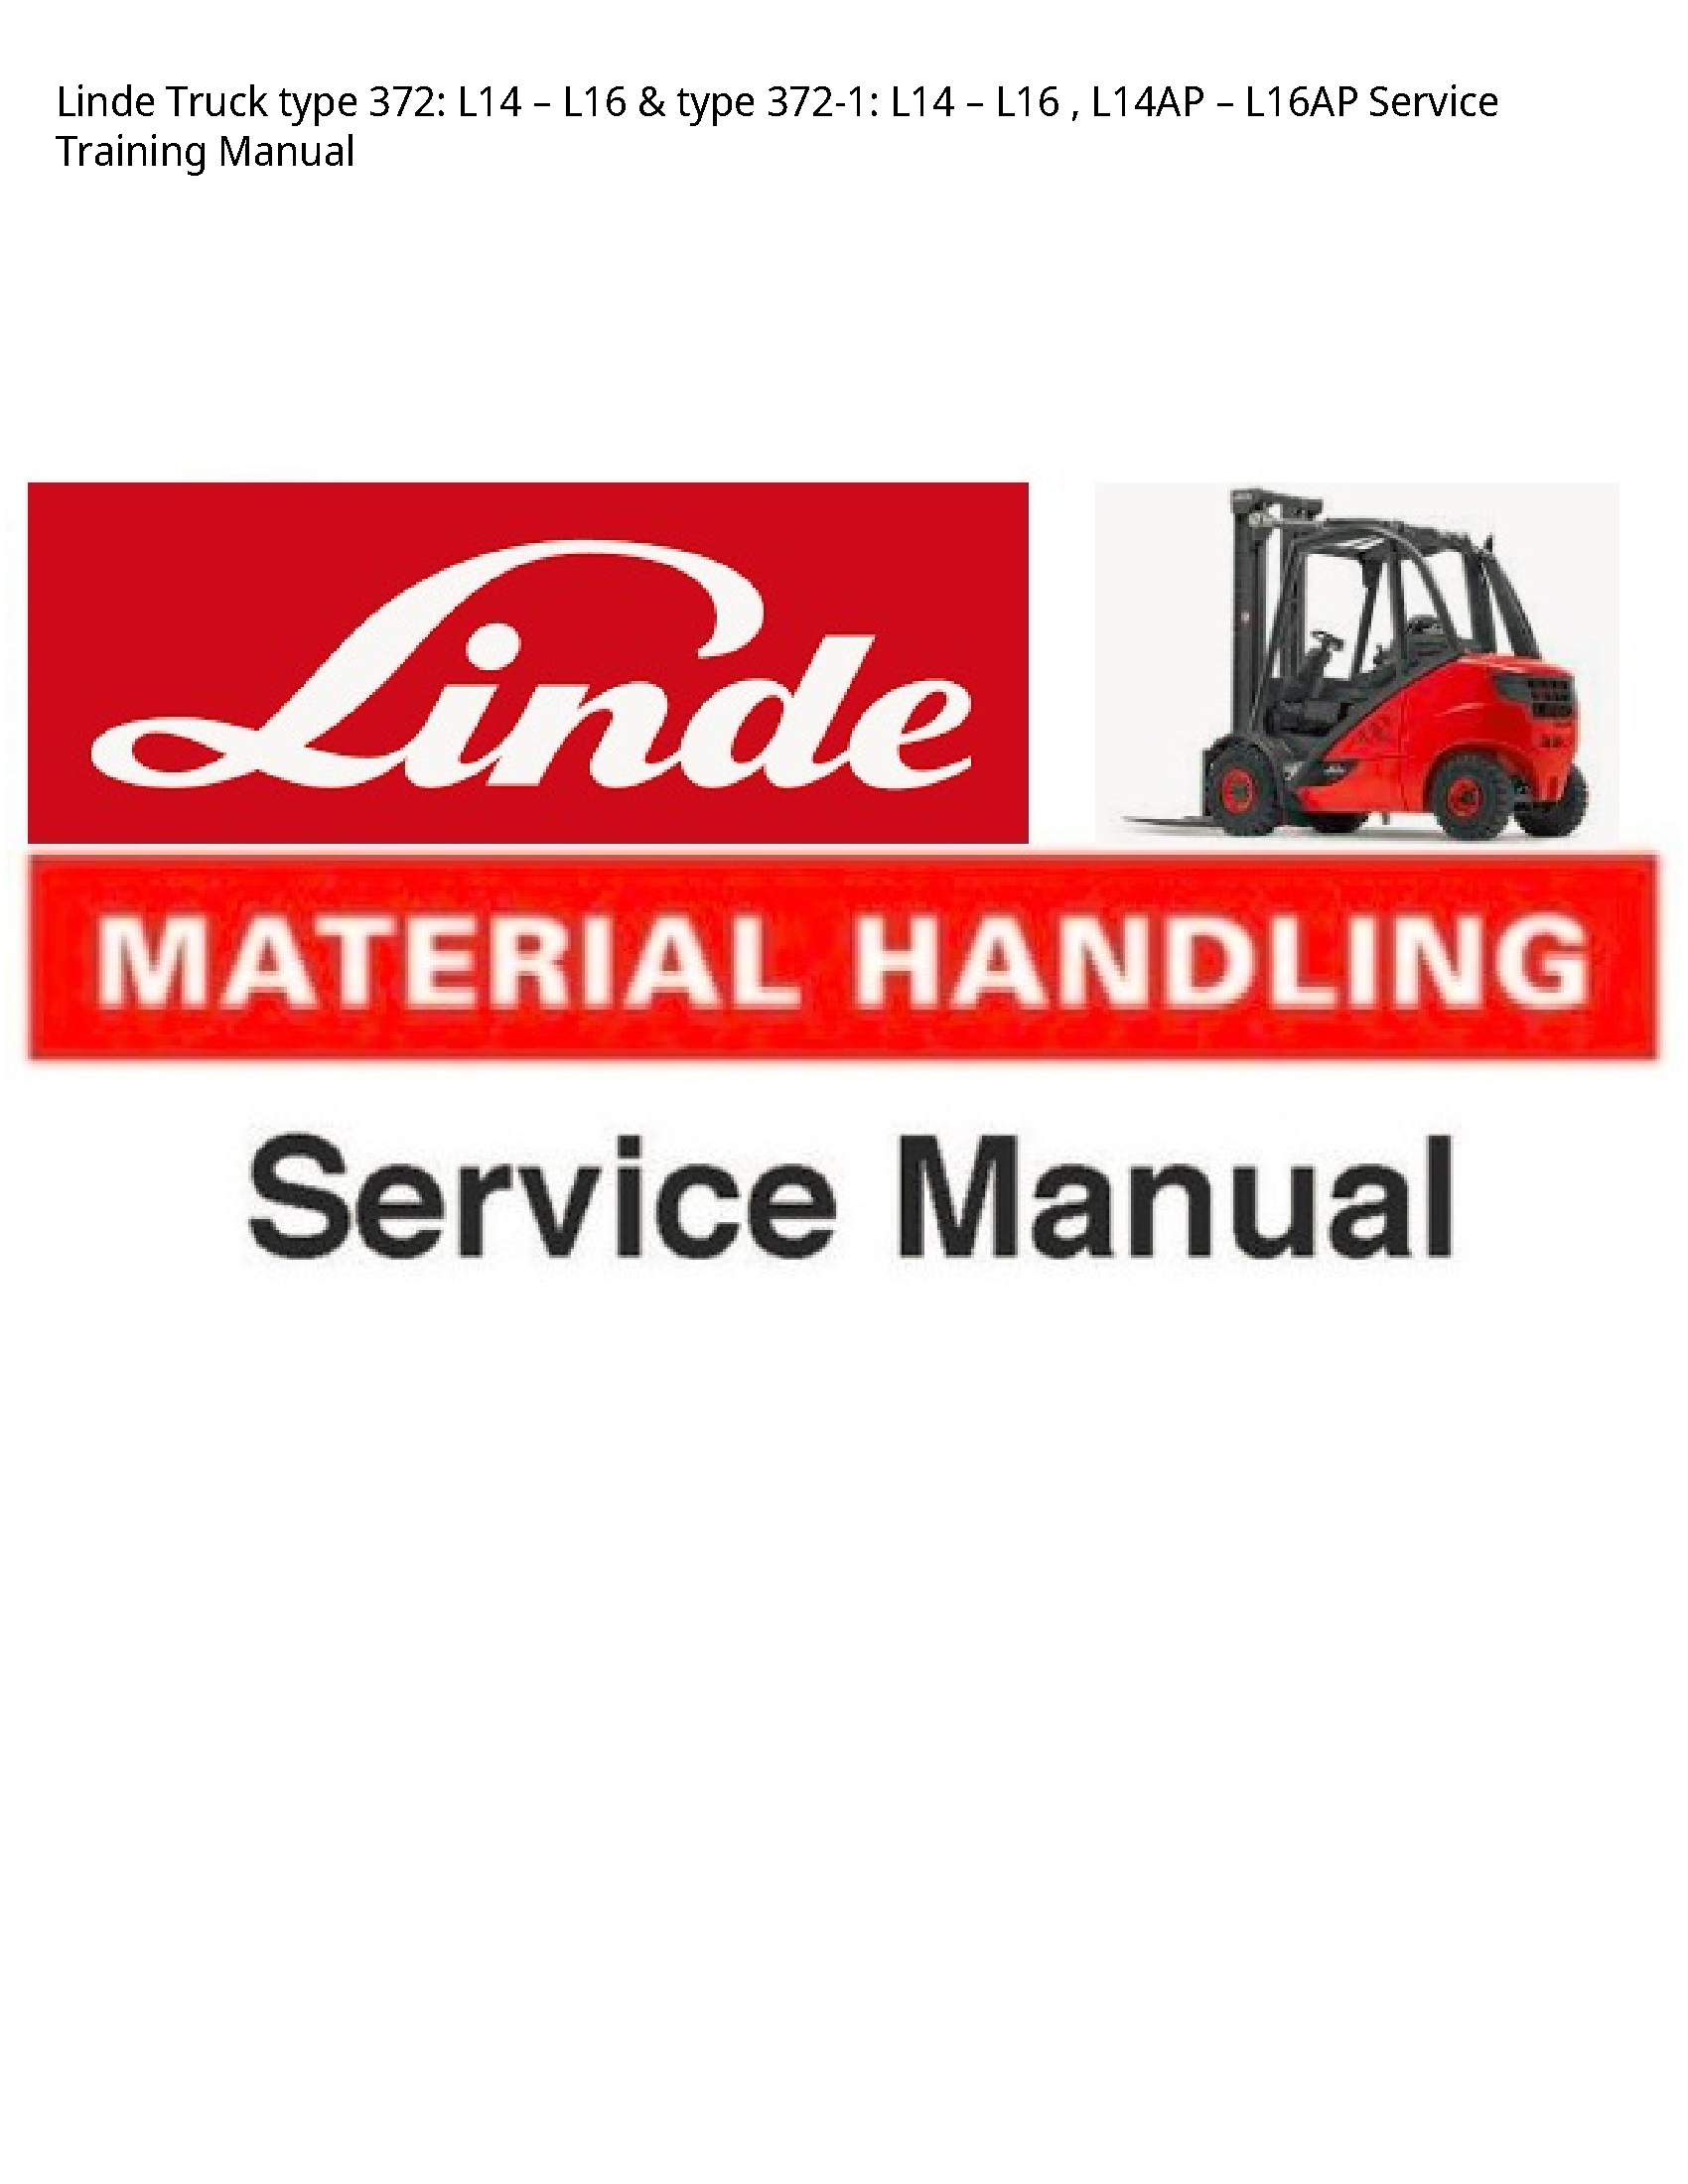 Linde 372: Truck type type Service Training manual